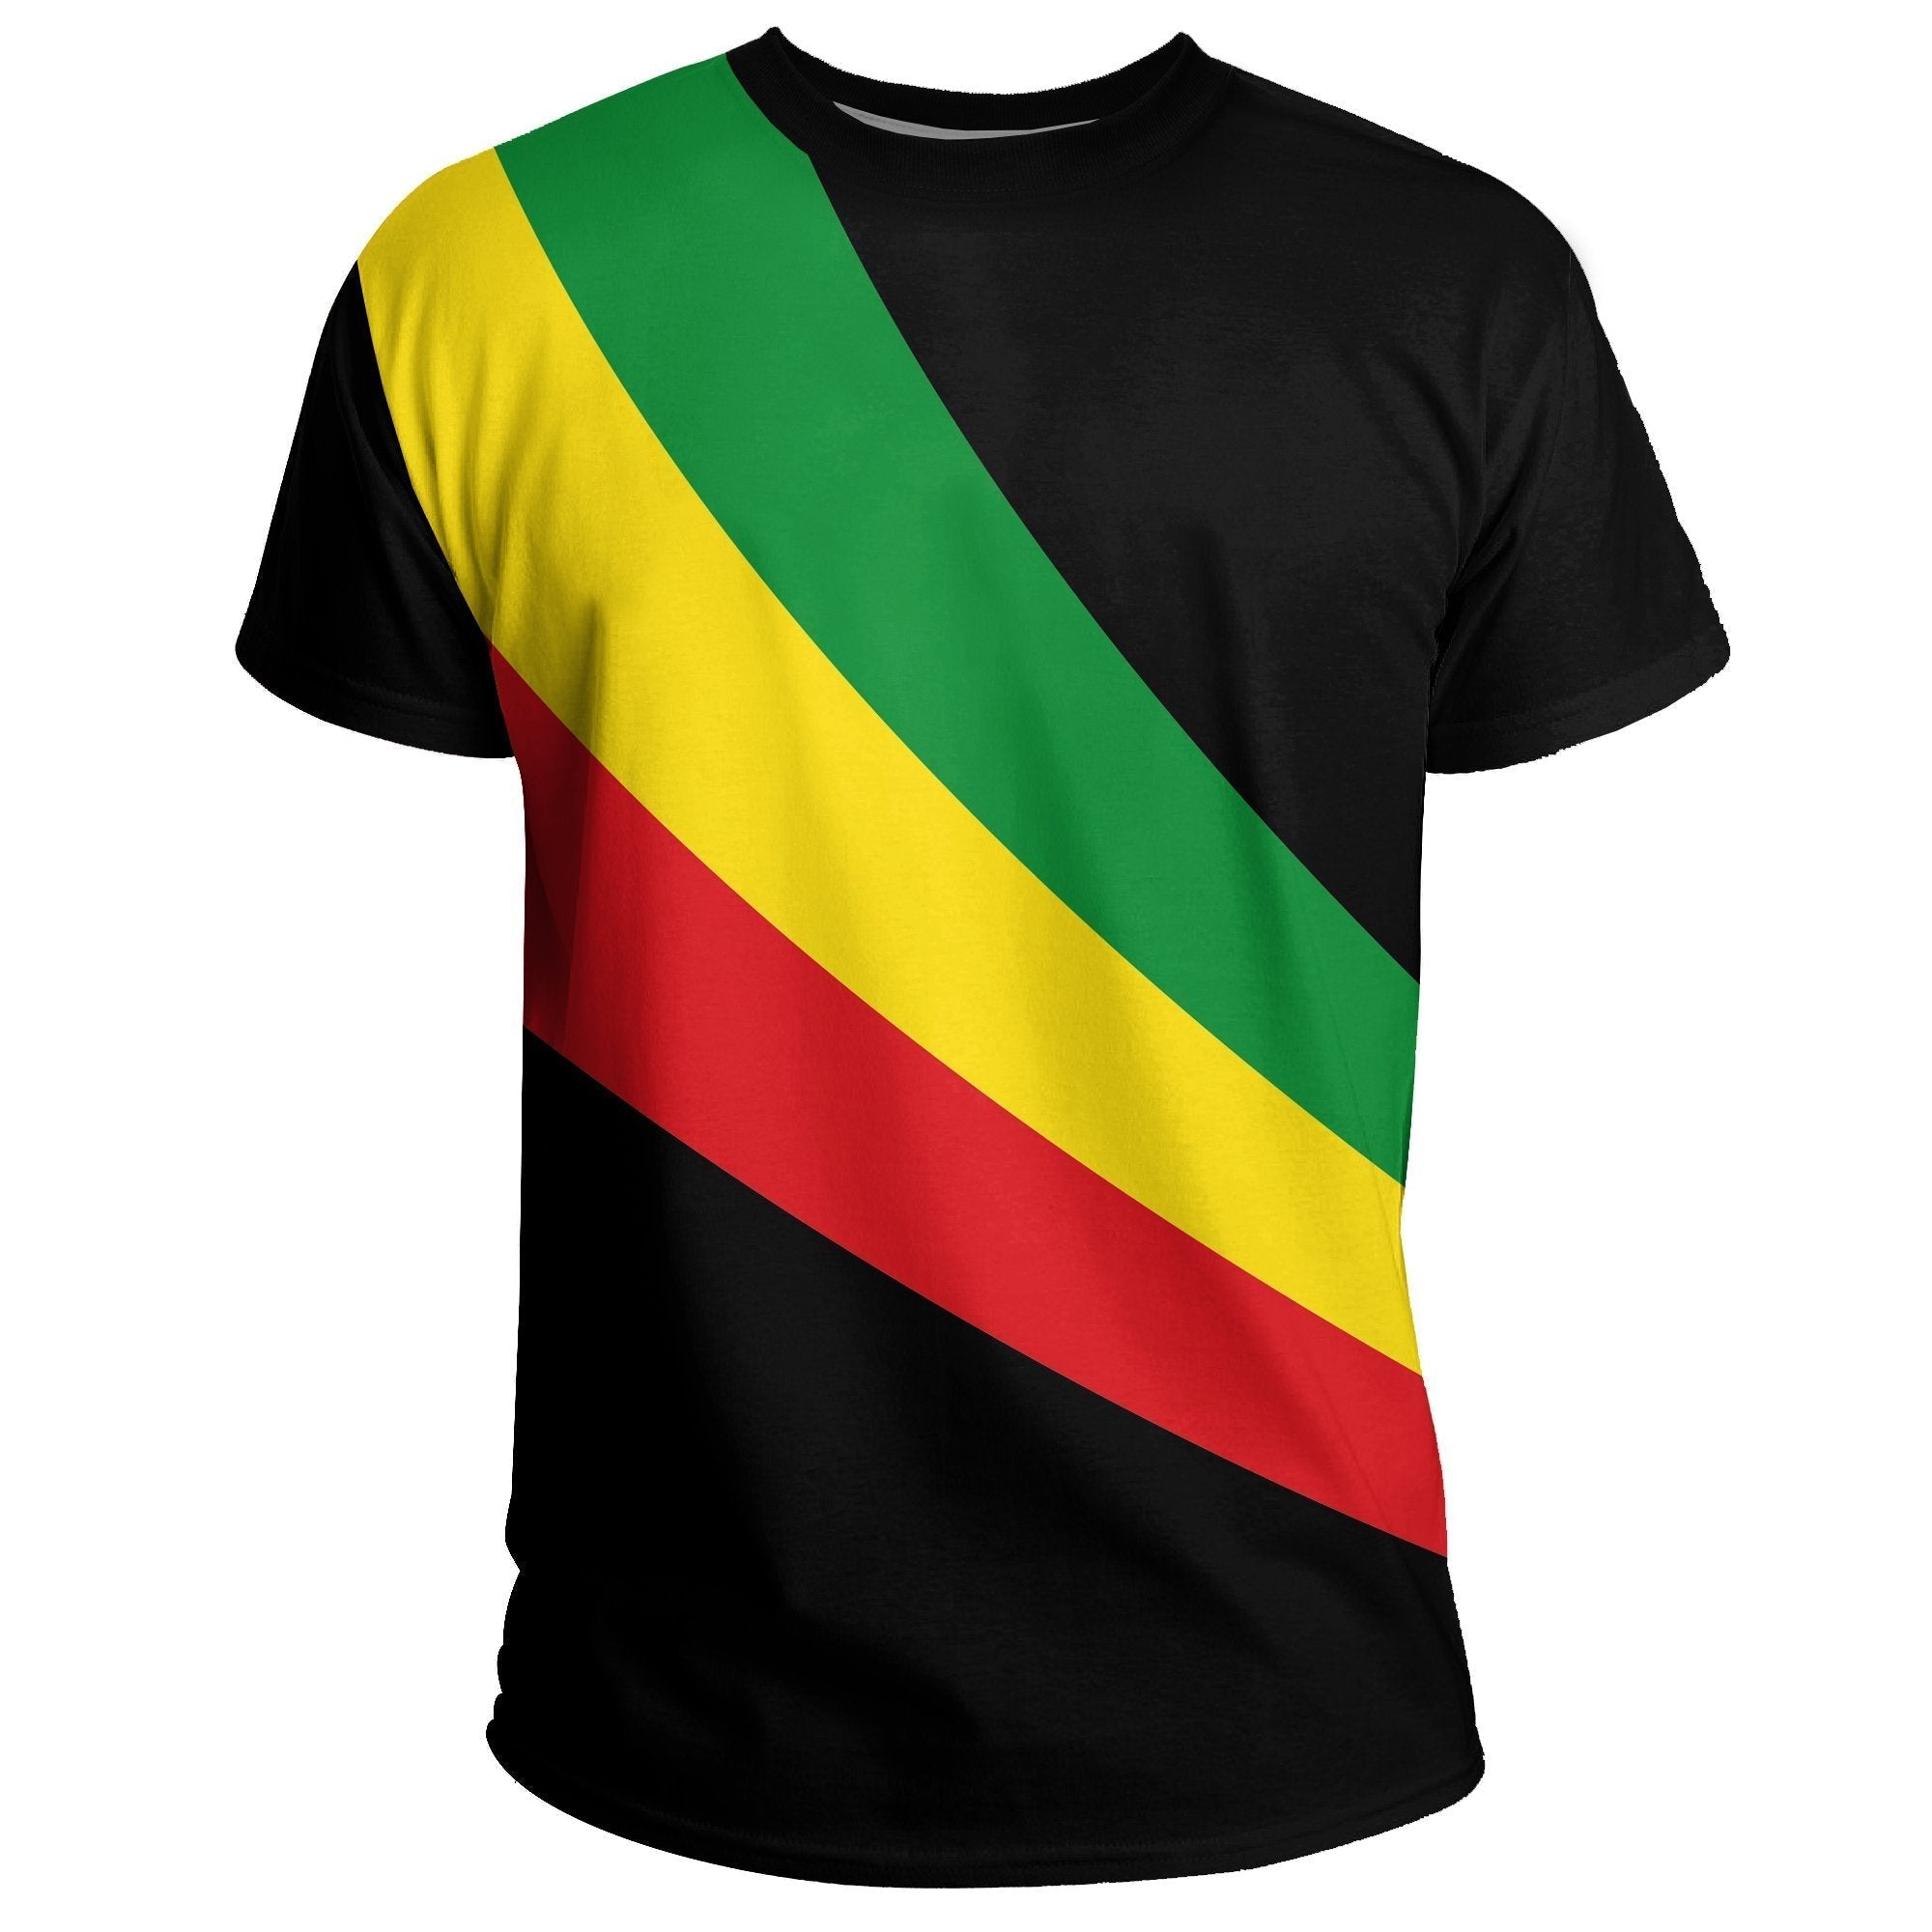 ethiopia-flag-t-shirt-new